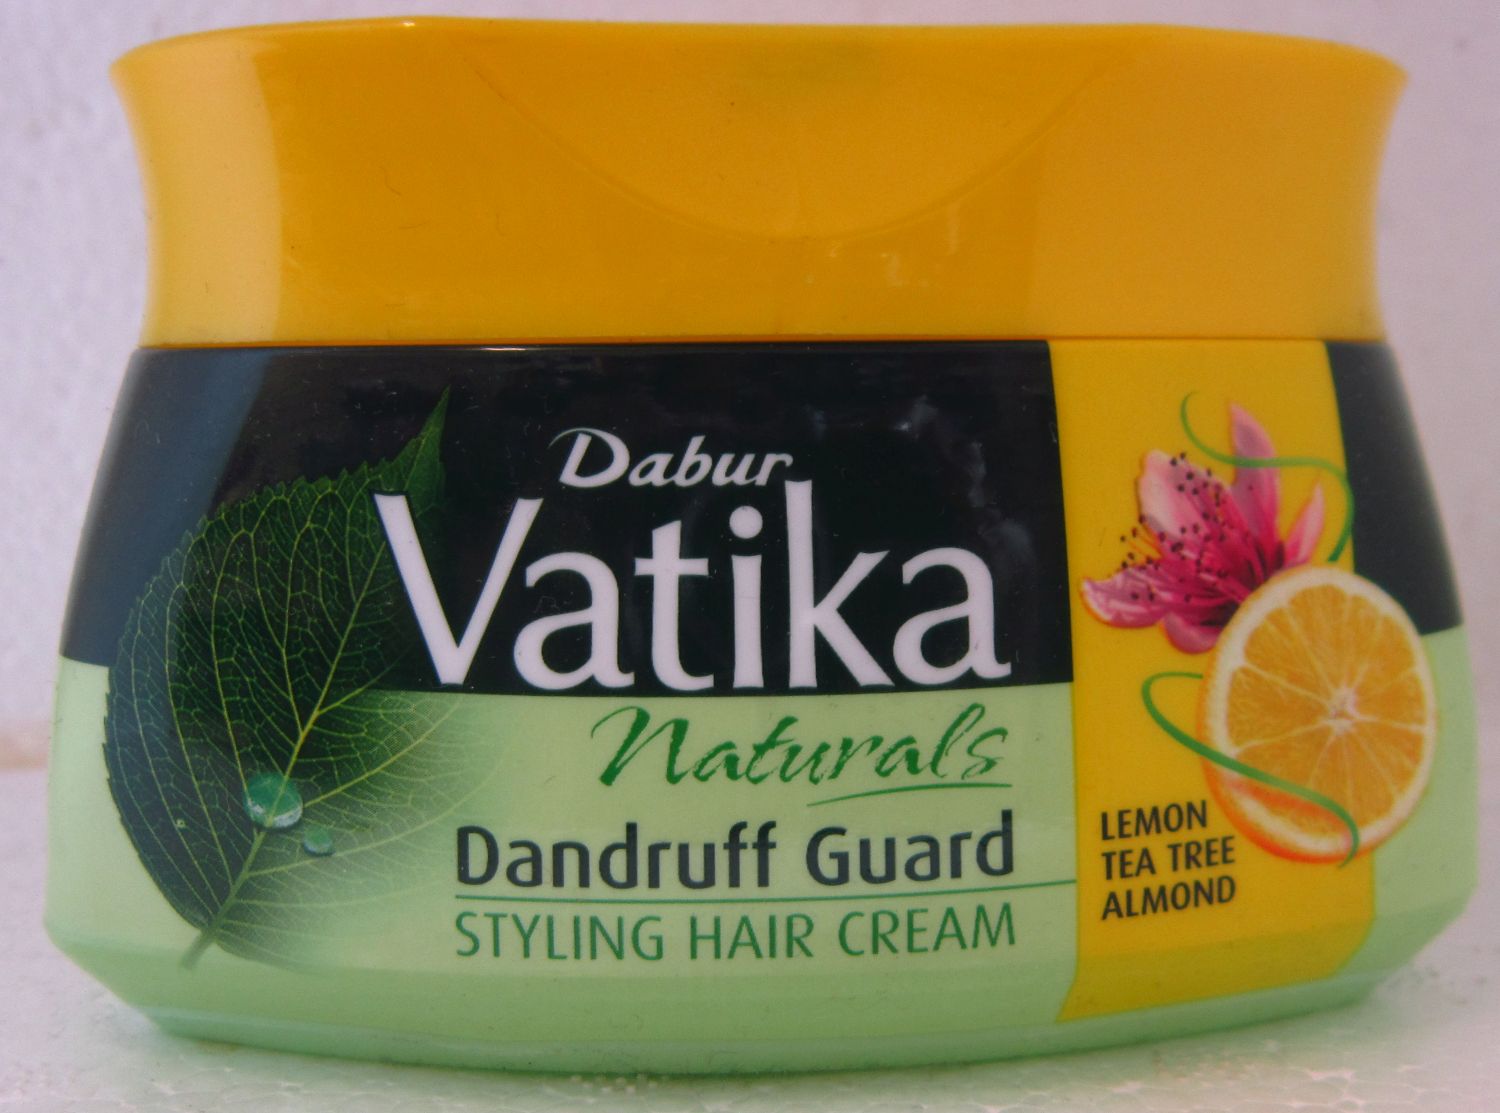 Dabur Vatika Dandruff Guard Styling Hair Cream Image